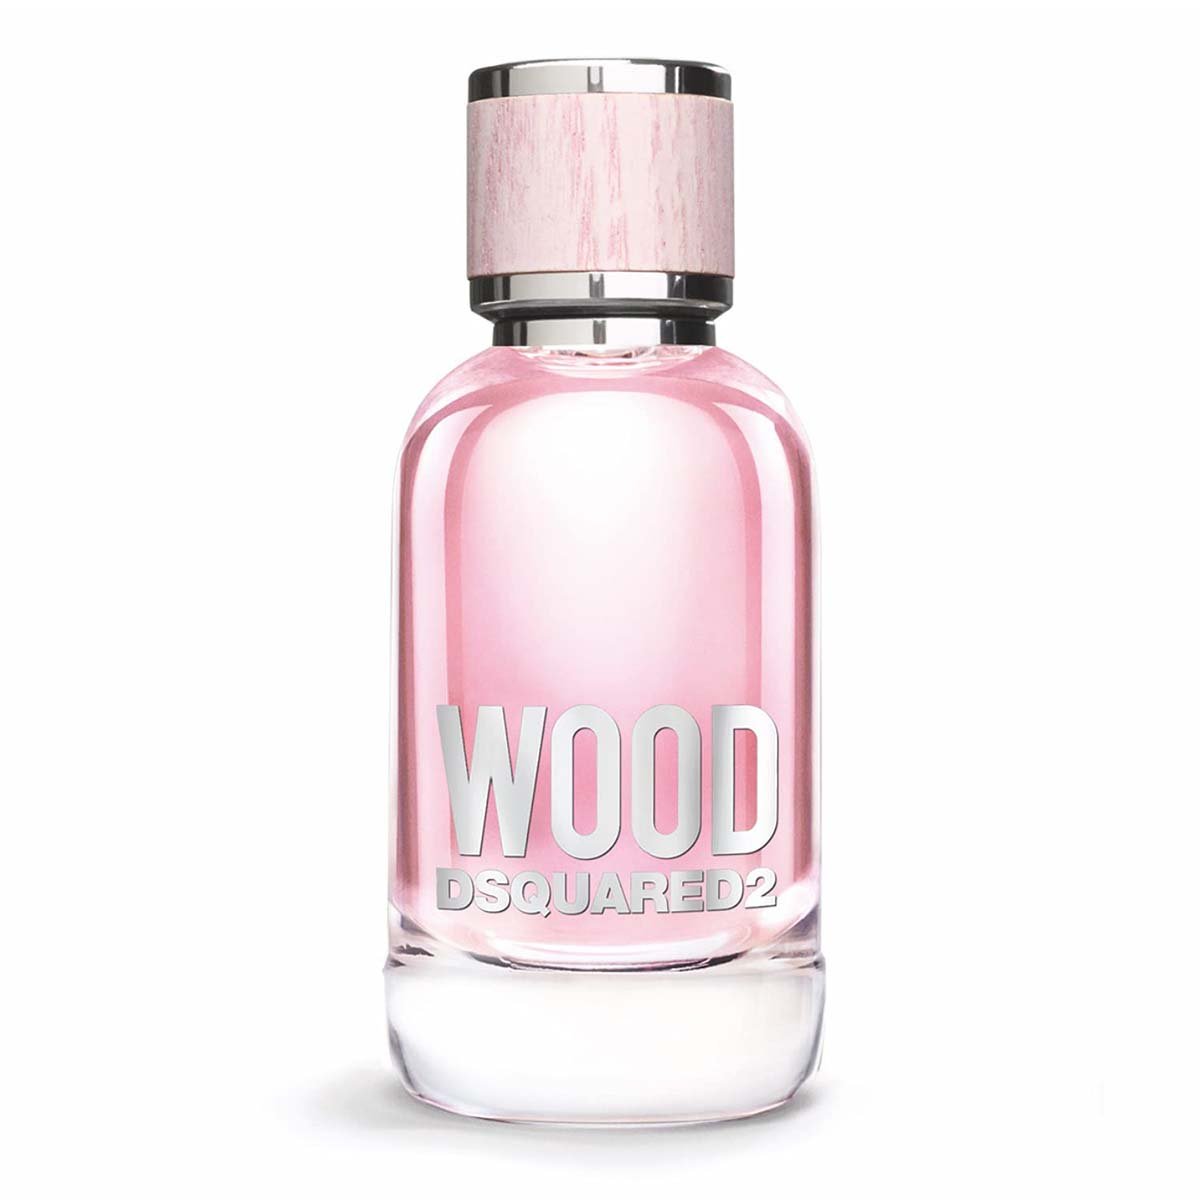 Dsquared 2 Wood D2 Pour Feme Edt For Women 100 ml-Perfume - AllurebeautypkDsquared 2 Wood D2 Pour Feme Edt For Women 100 ml-Perfume